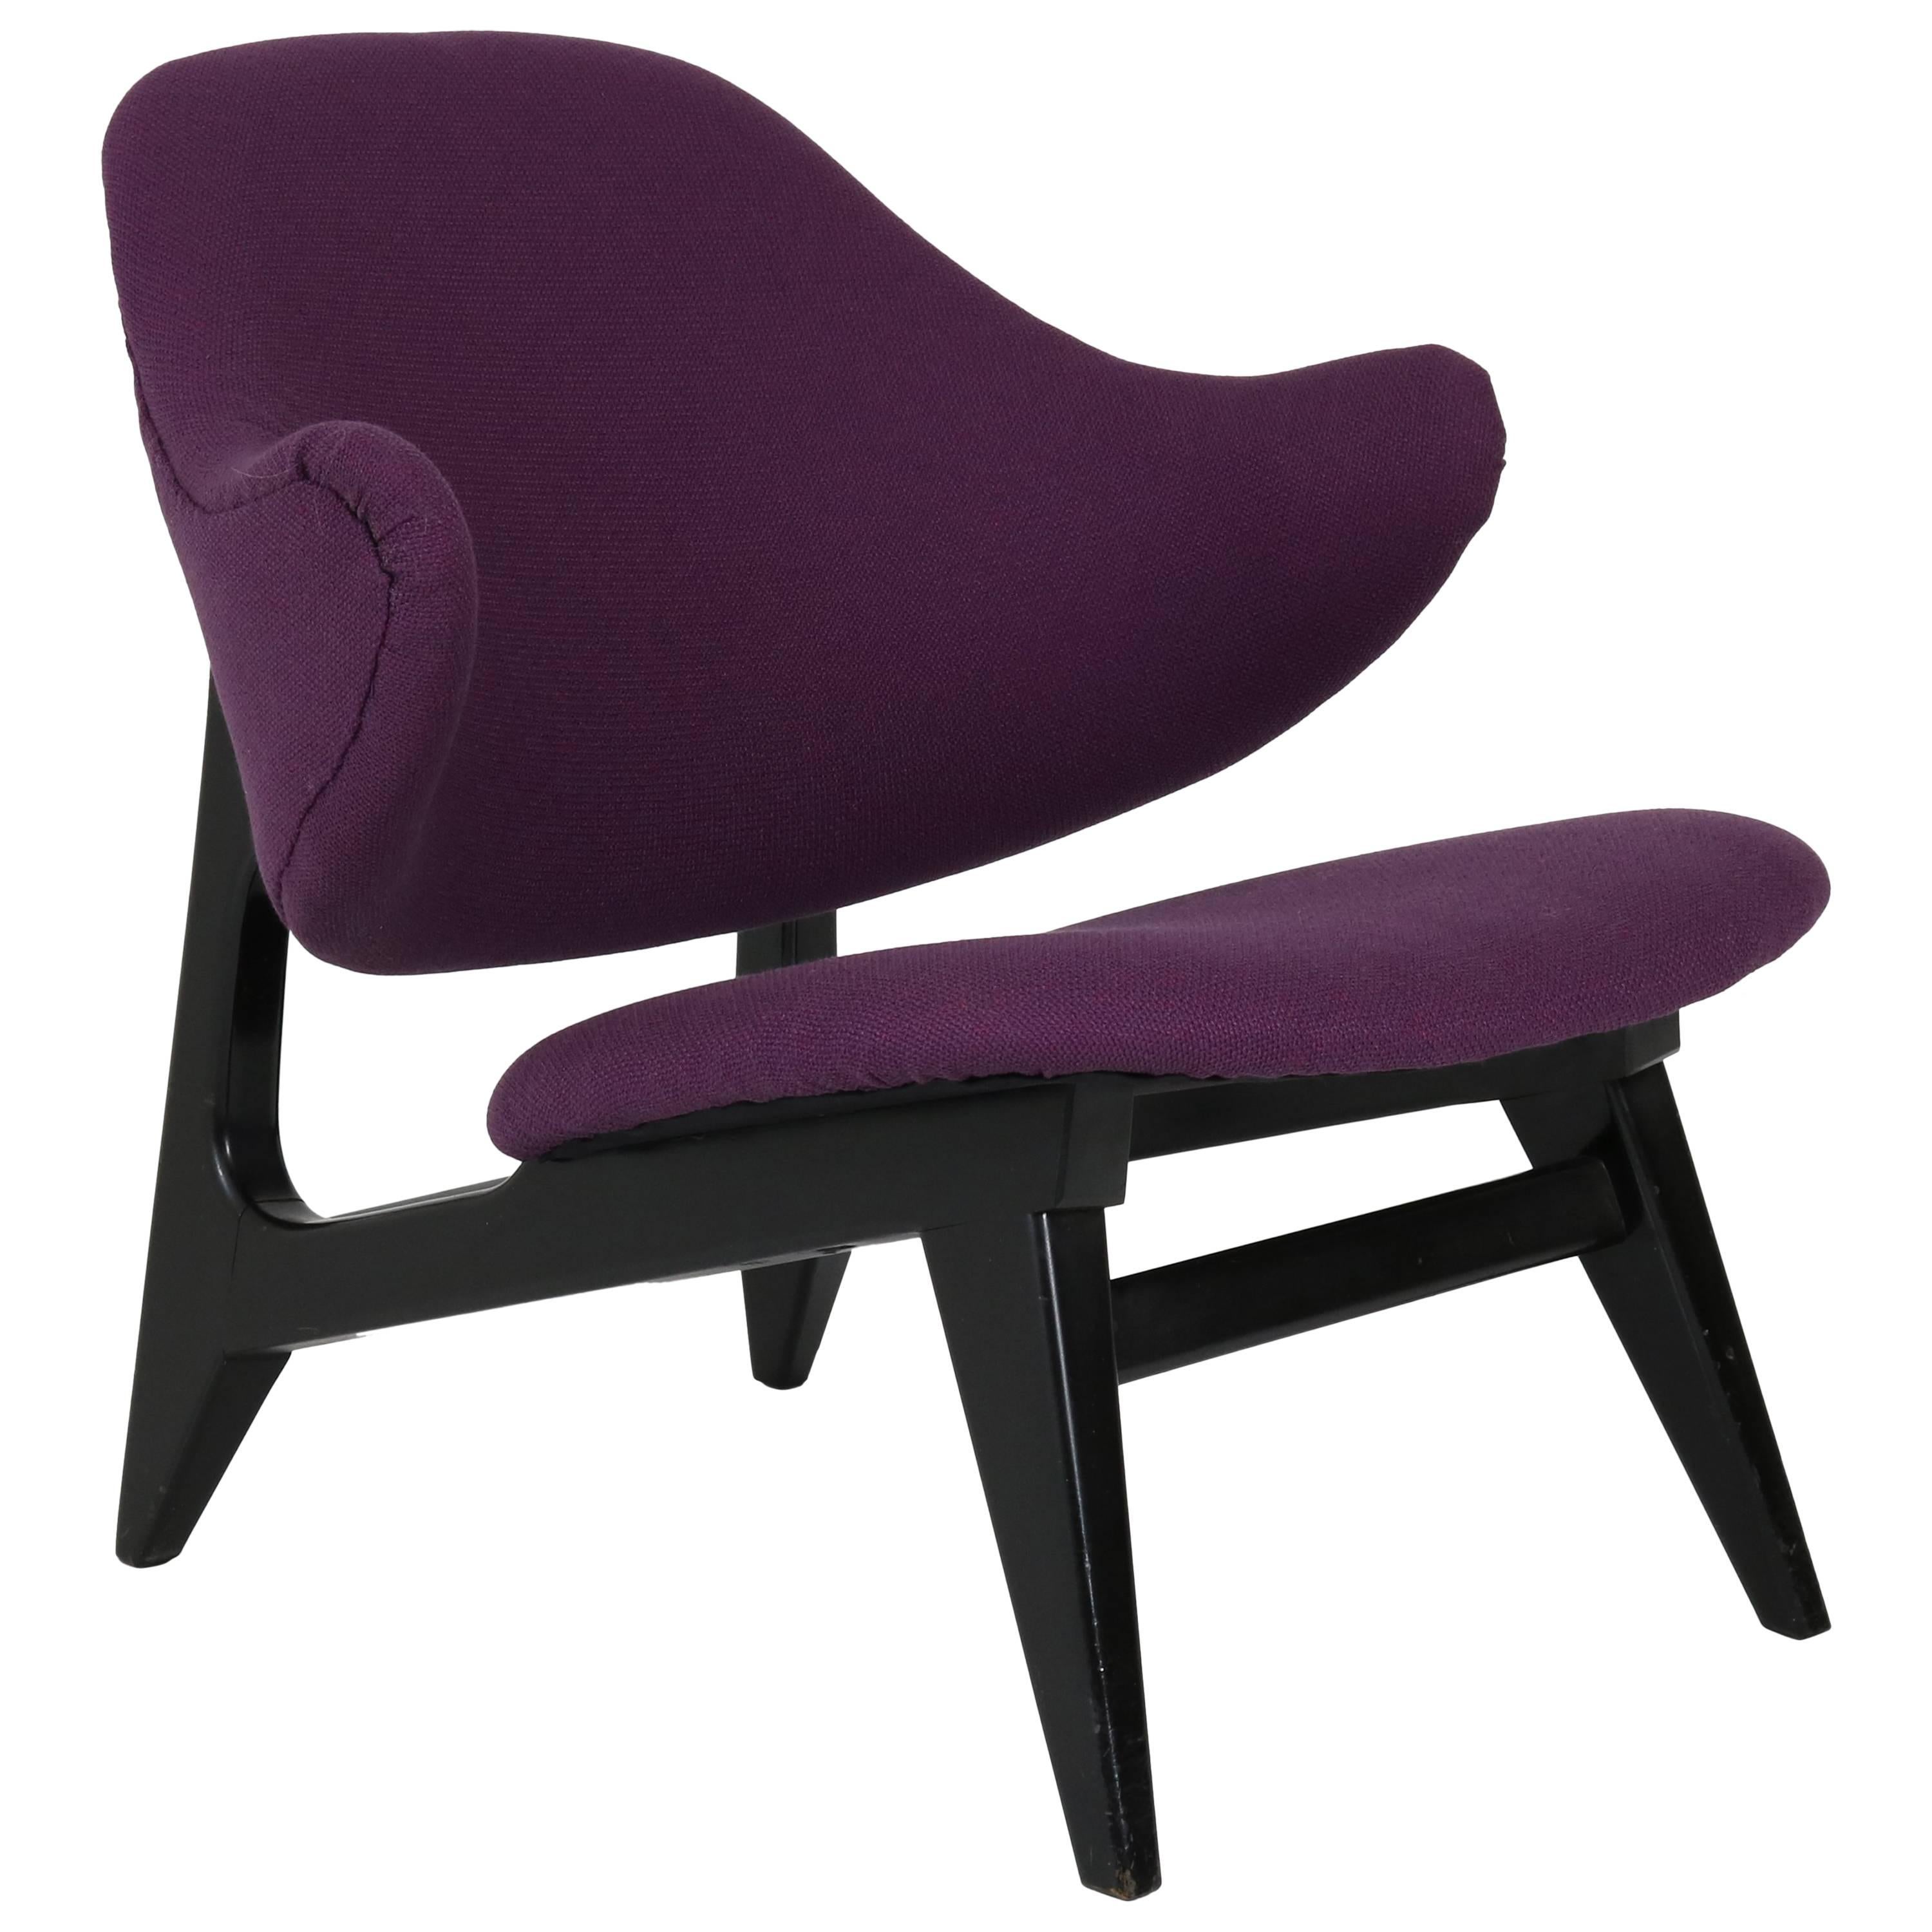 Dutch Mid-Century Modern Lounge Chair by Louis Van Teeffelen for WeBe, 1960s